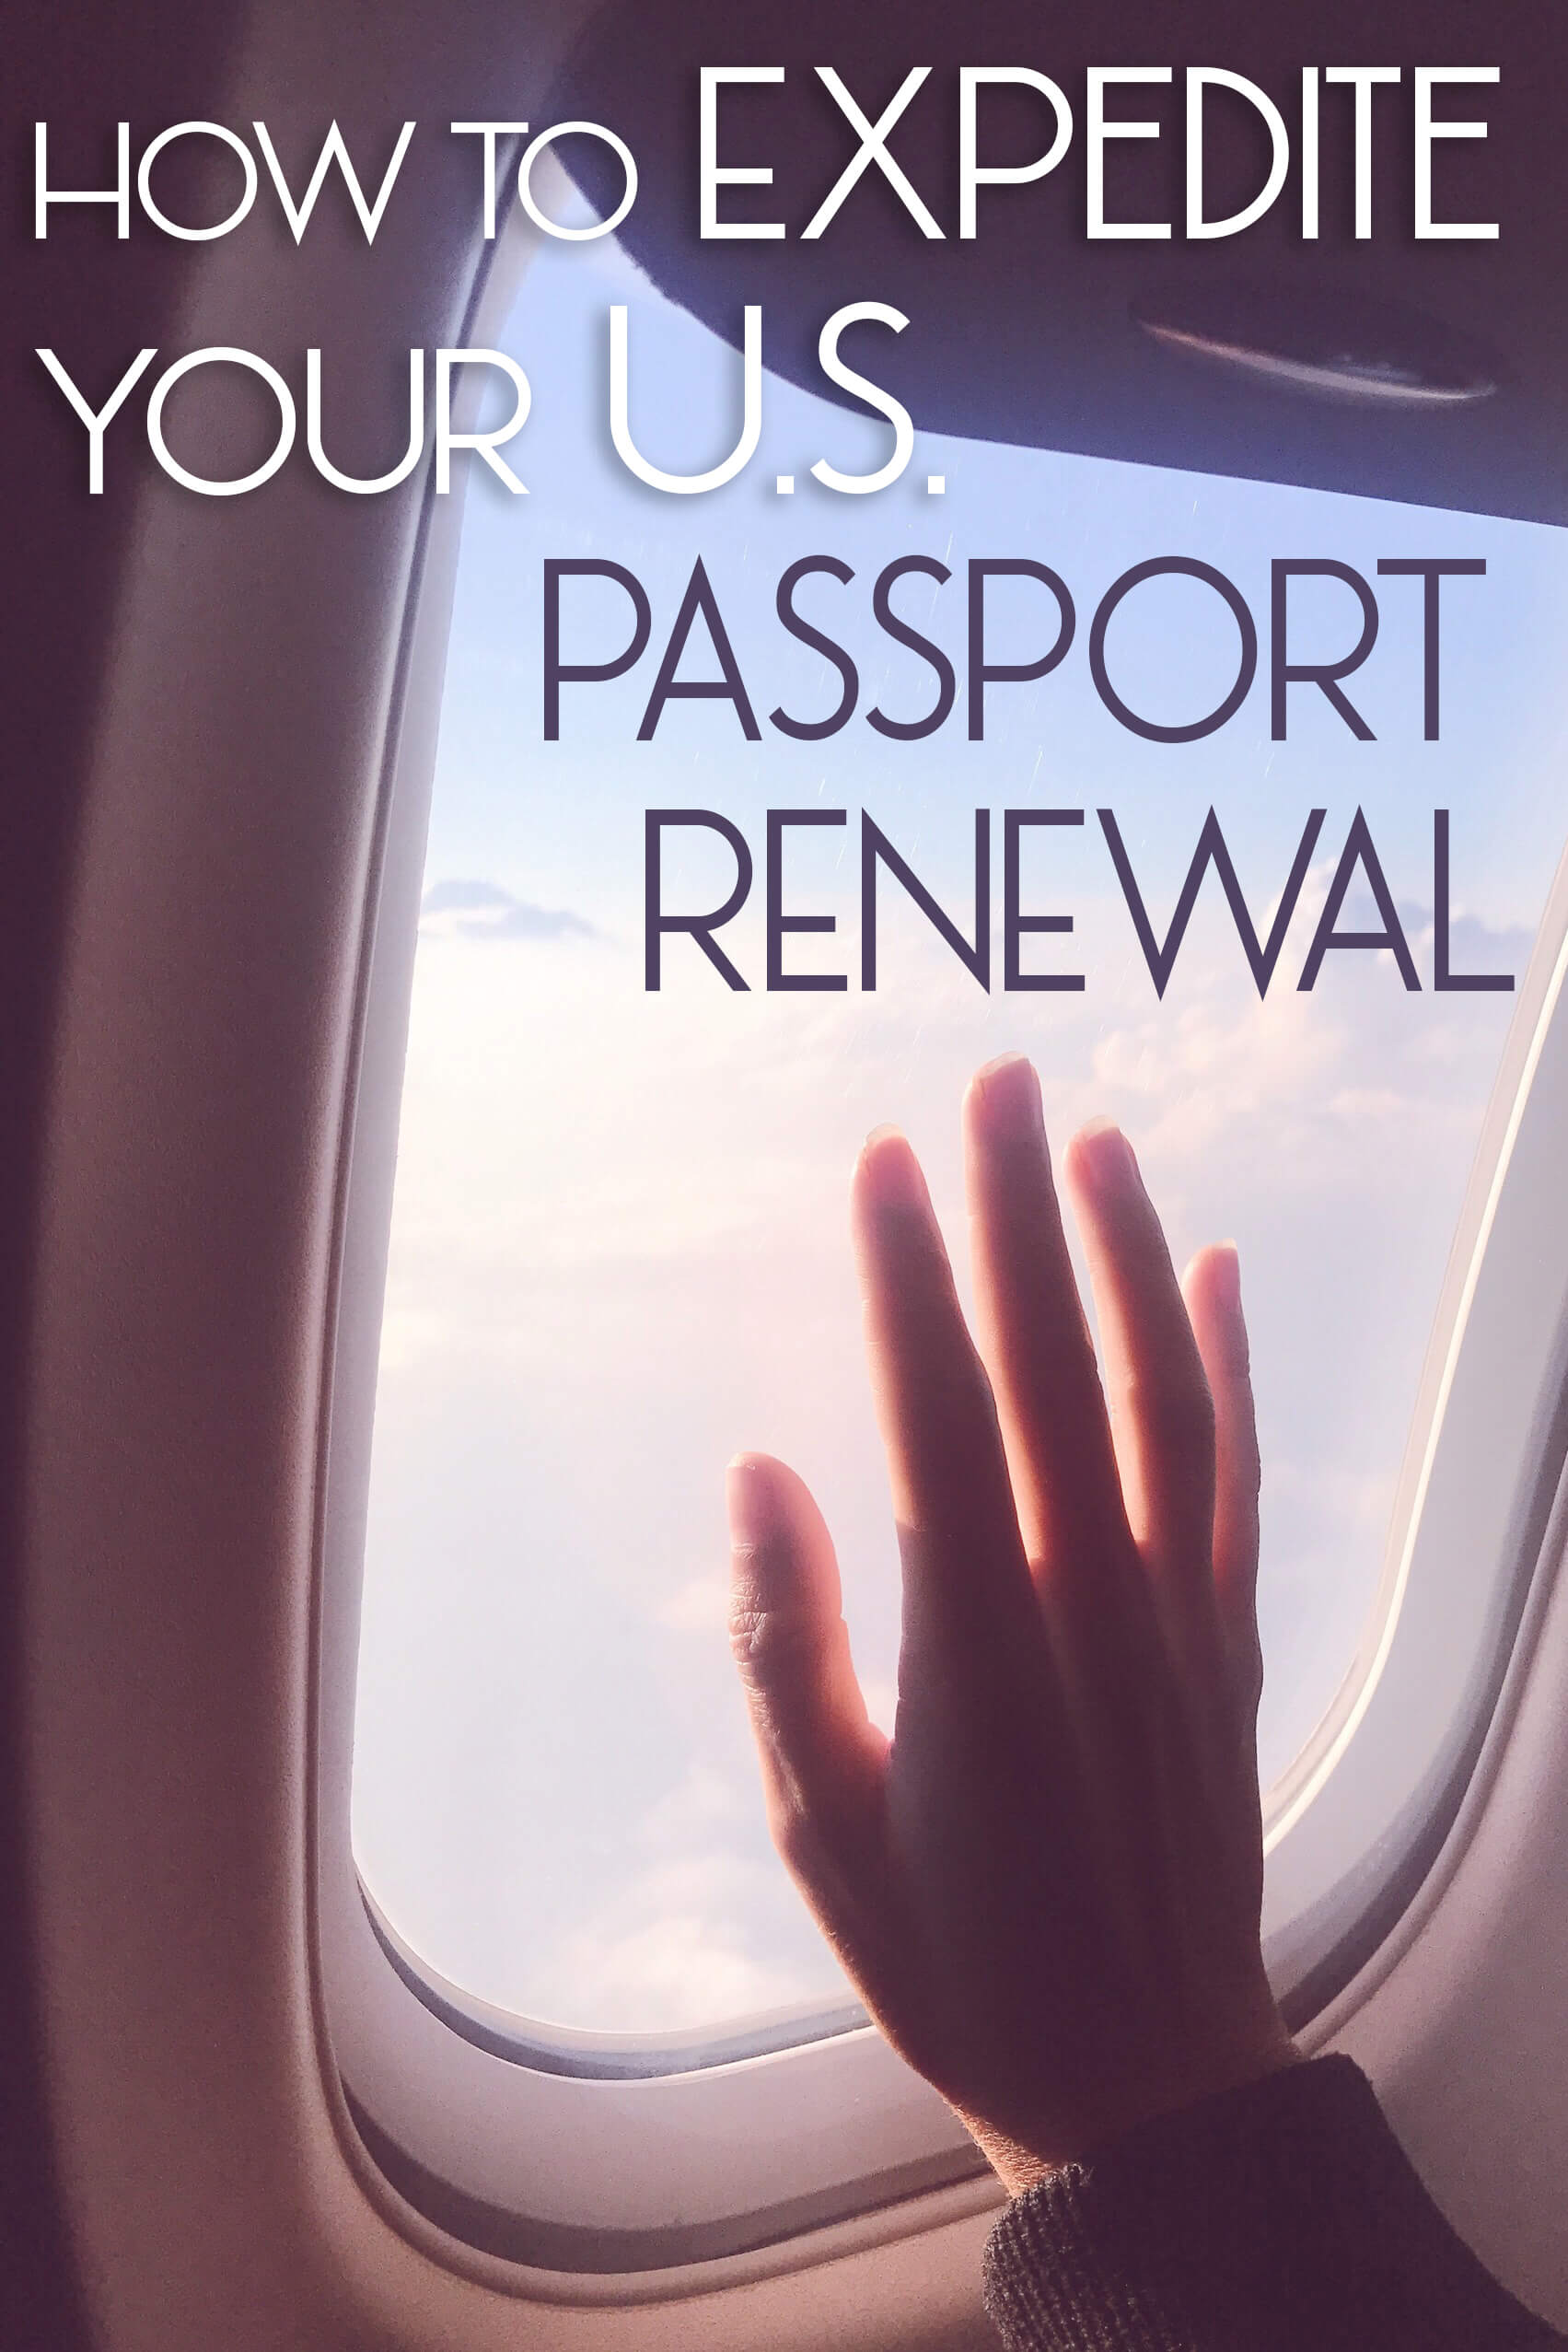 how to expedite your U.S. passport renewal